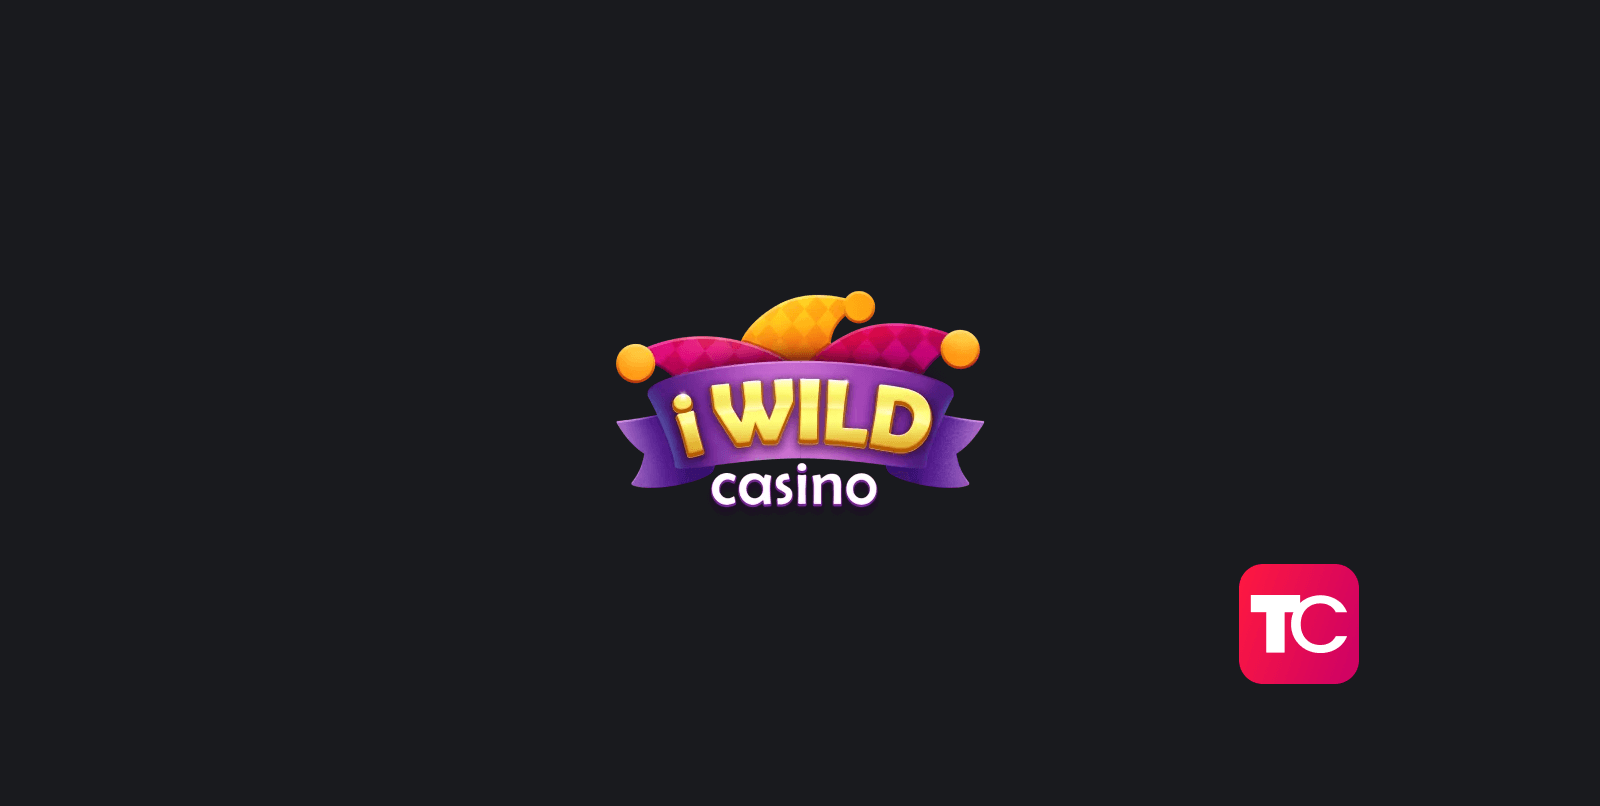 iwild casino welcome bonus casino review topcasinos